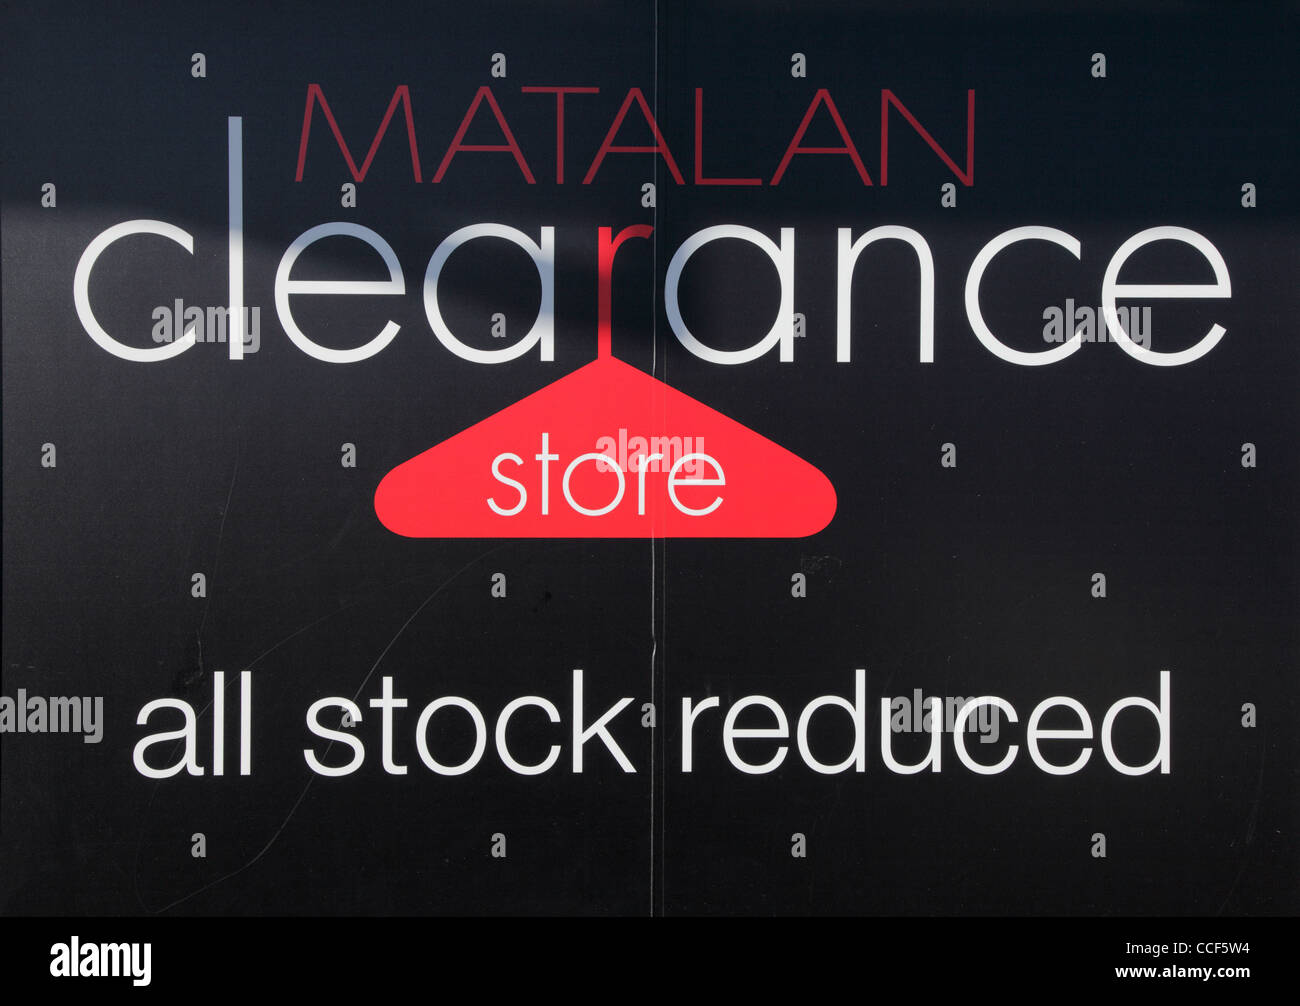 Matalan Clearance store notice all stock reduced Hylton Riverside Retail Park Sunderland north east England UK Stock Photo